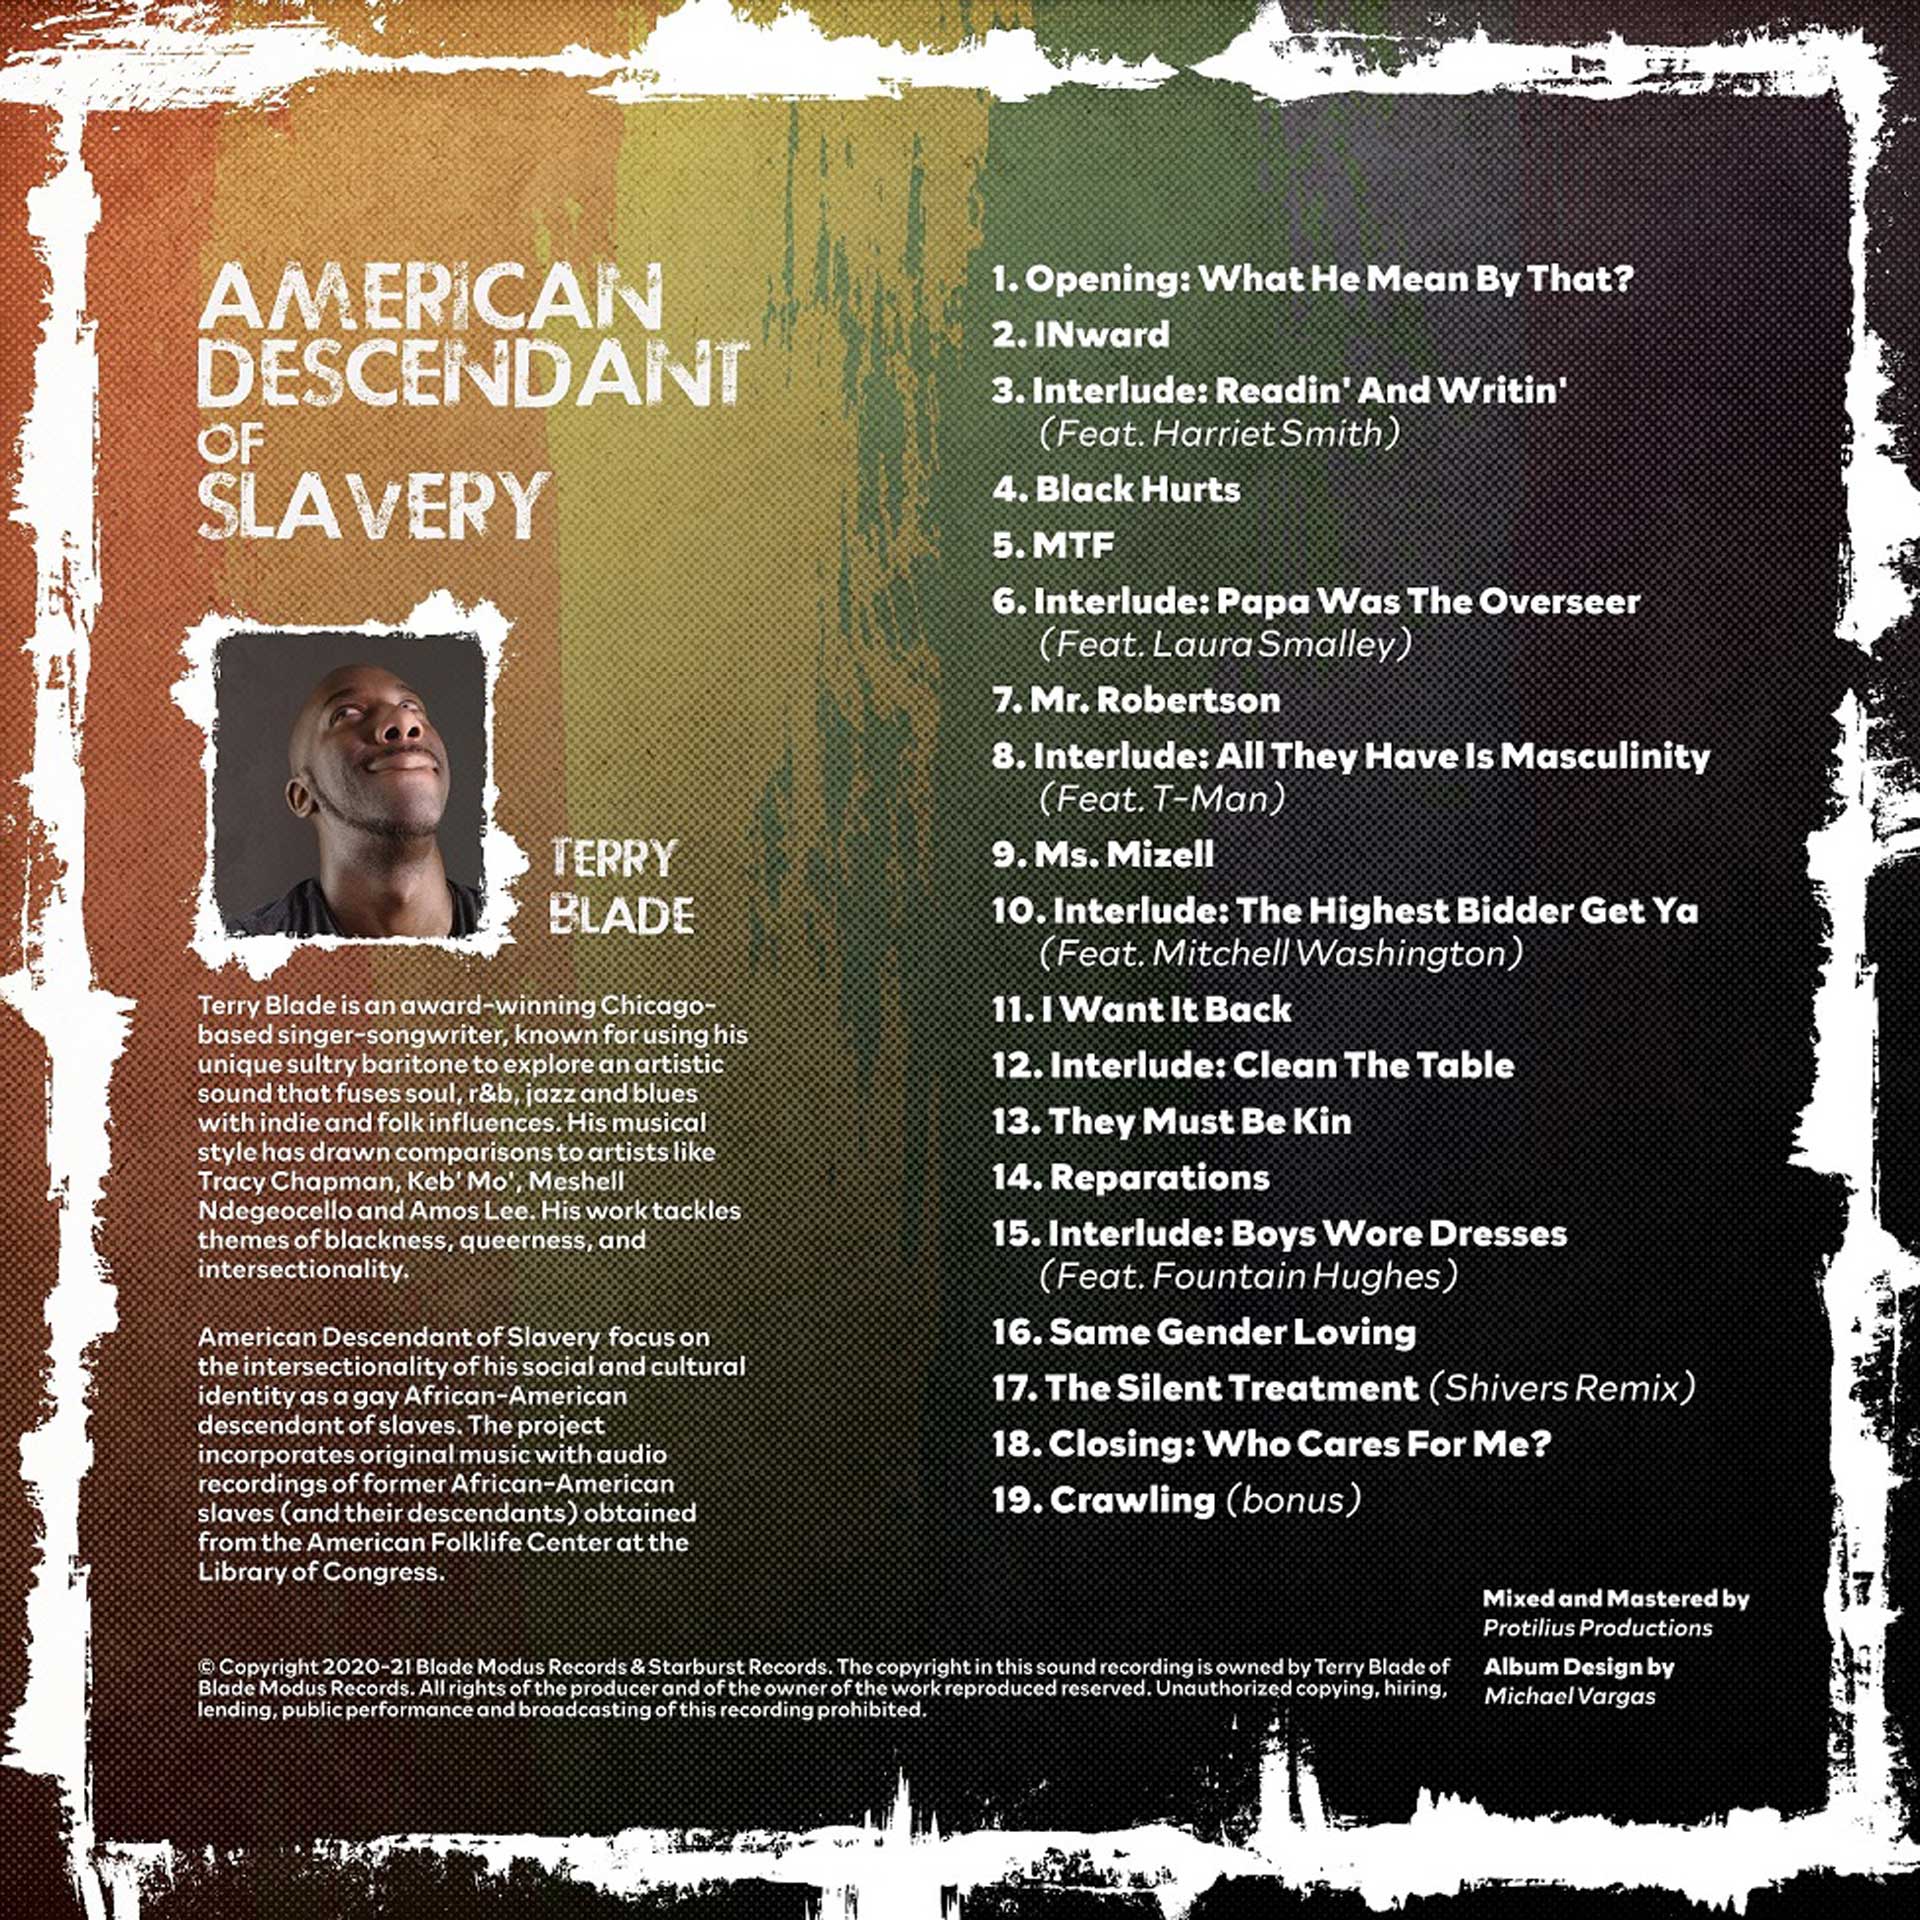 LIT Talent Awards - American Descendant of Slavery, The Album